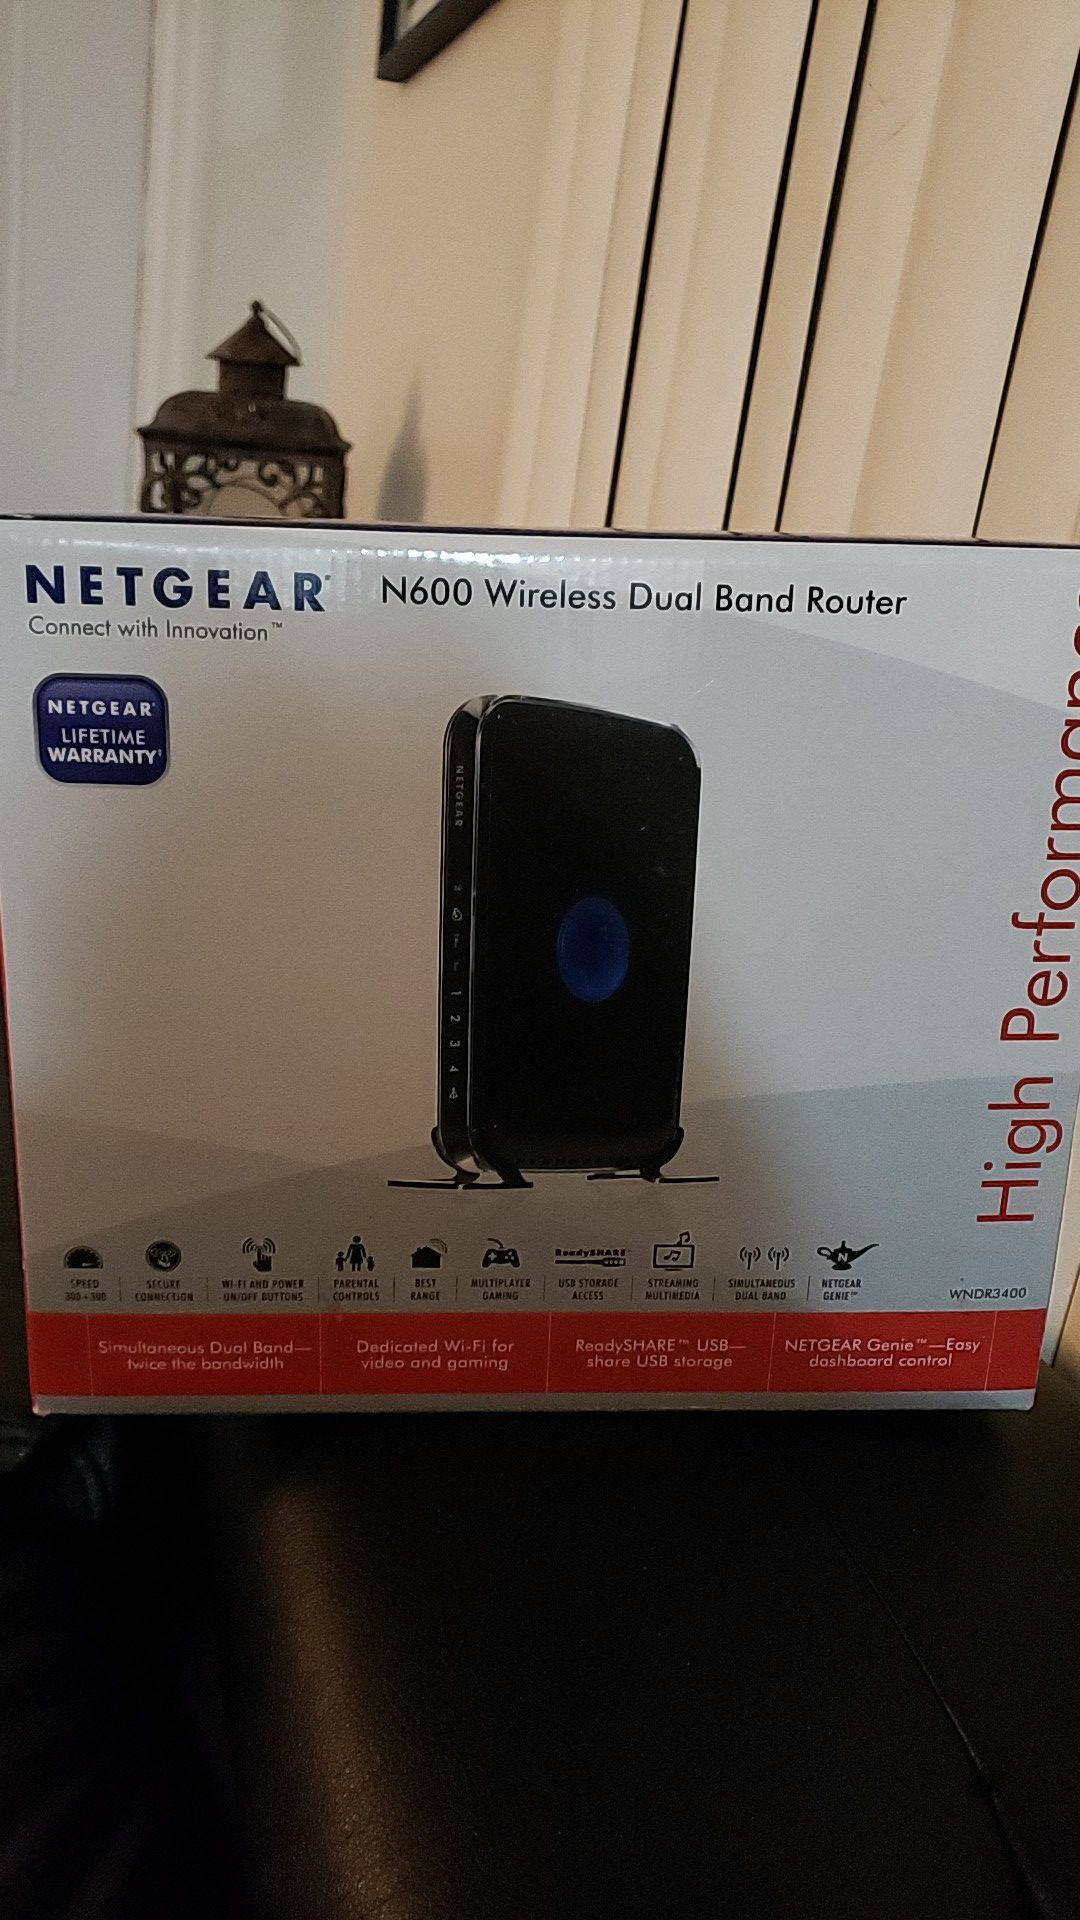 Net gear n600 wireless dual band router